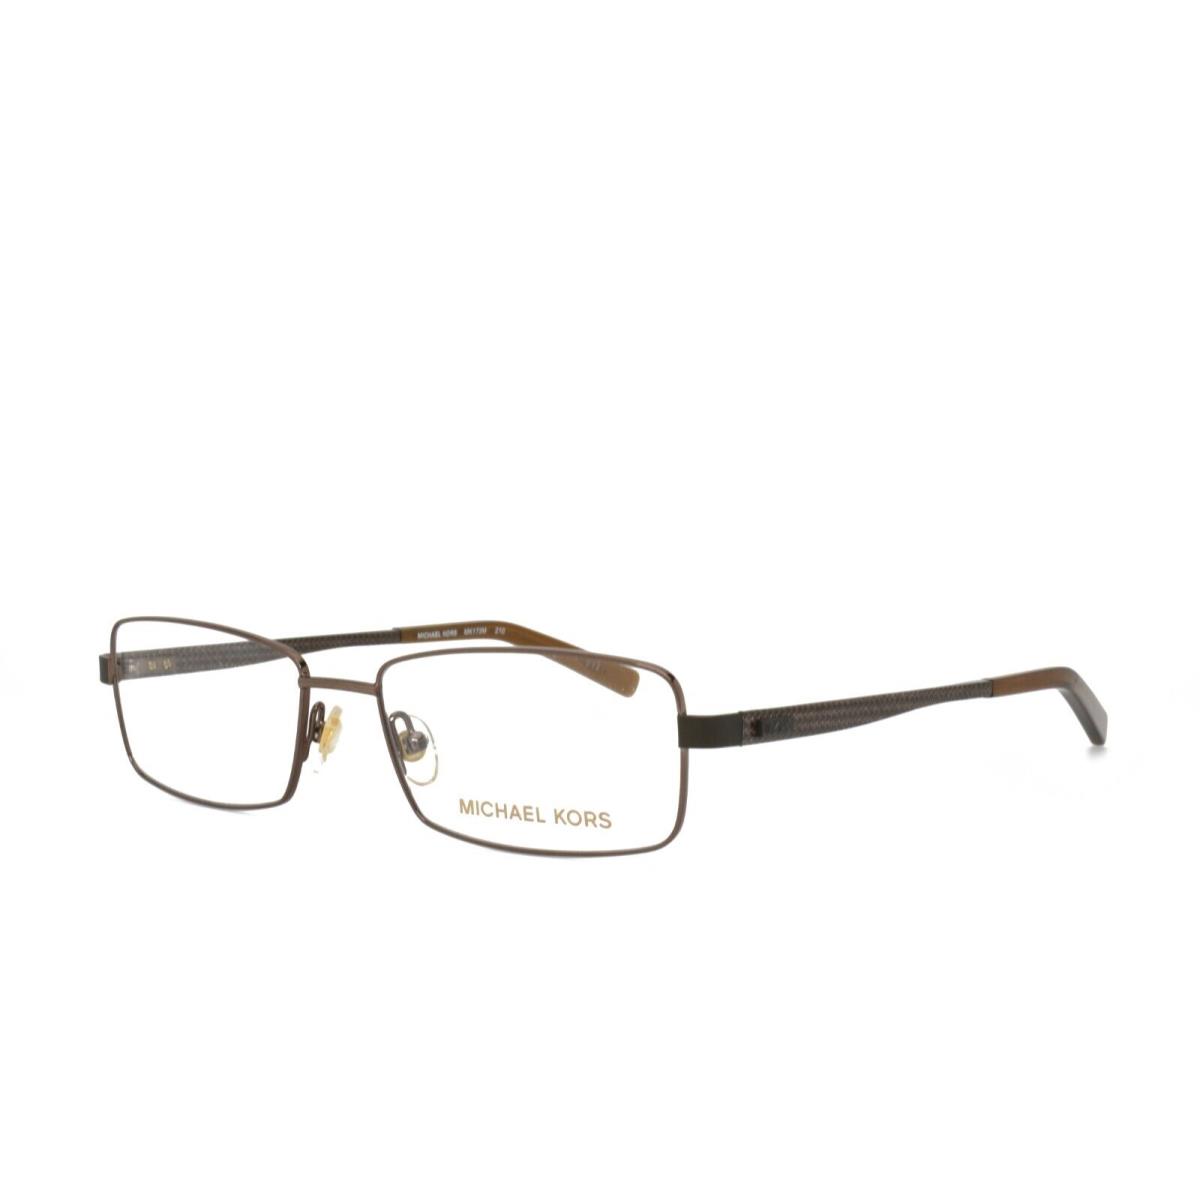 Michael Kors 173M 210 53-16-145 Brown Eyeglasses Frames